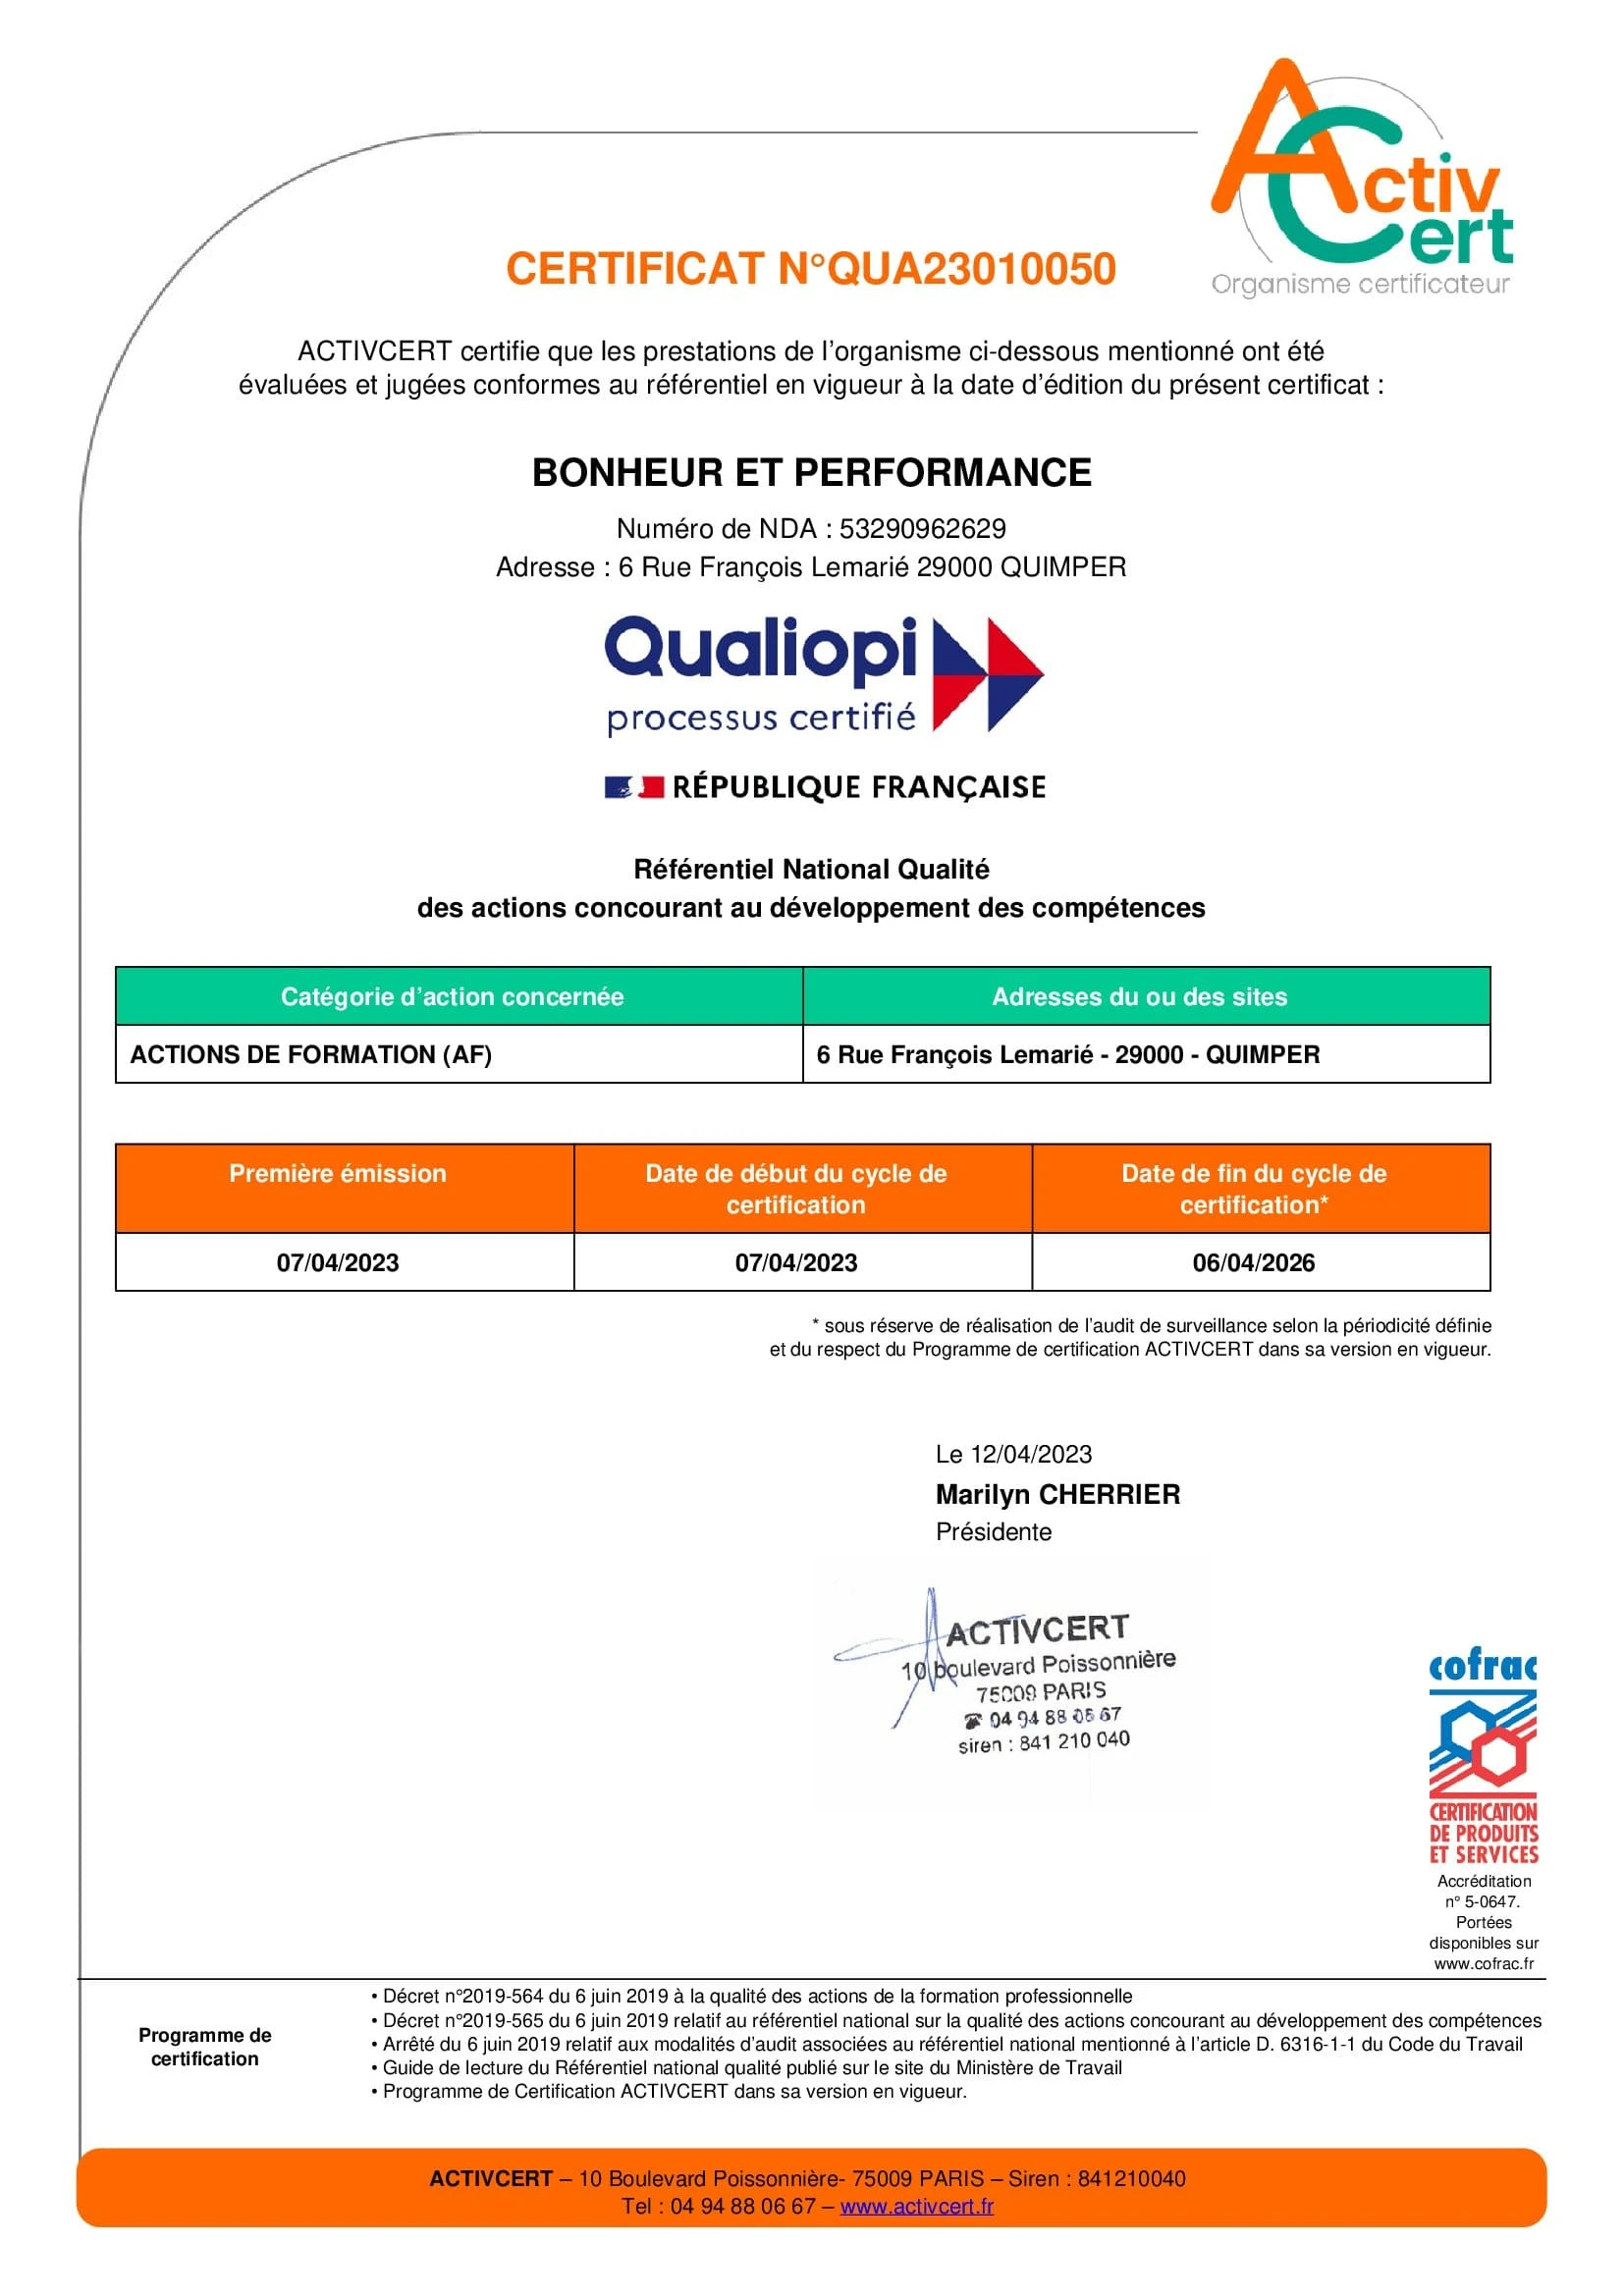 1404-certificat-qualiopi---bonheur-et-performance-17007378450503.jpg